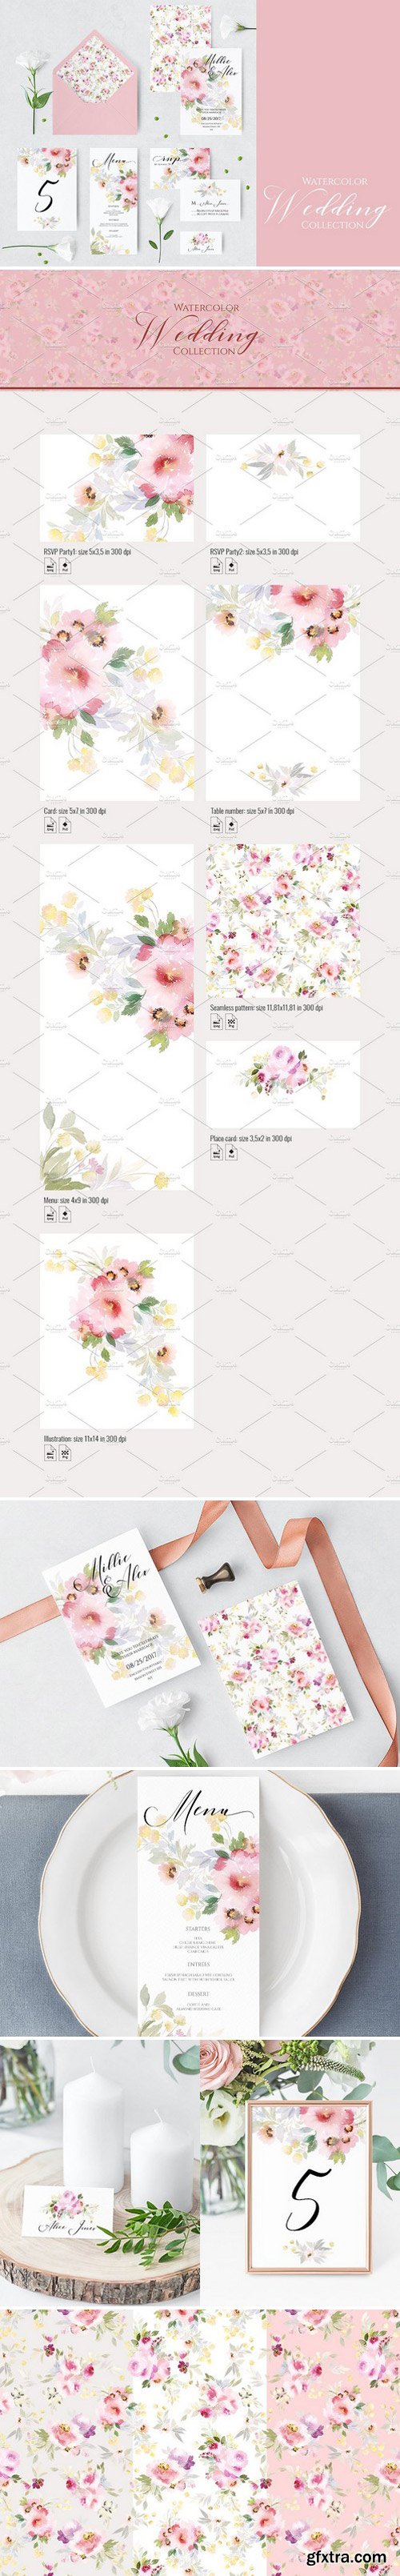 CM - Floral wedding invitations 2223975